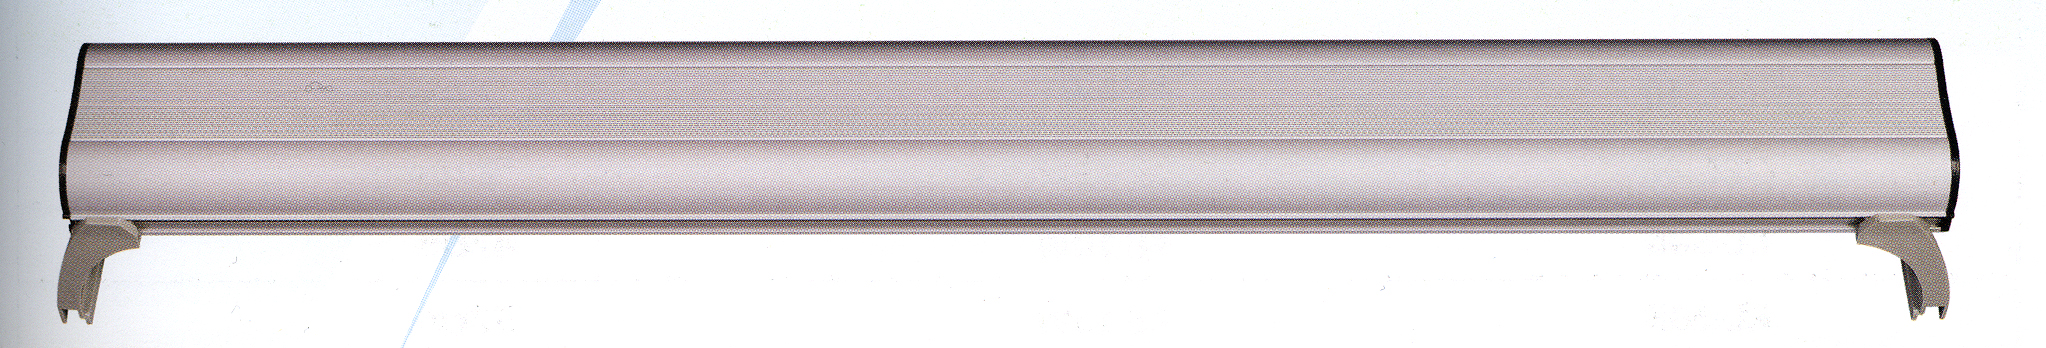 XILONG светильник T8 2х30Вт XL-120A, 117см